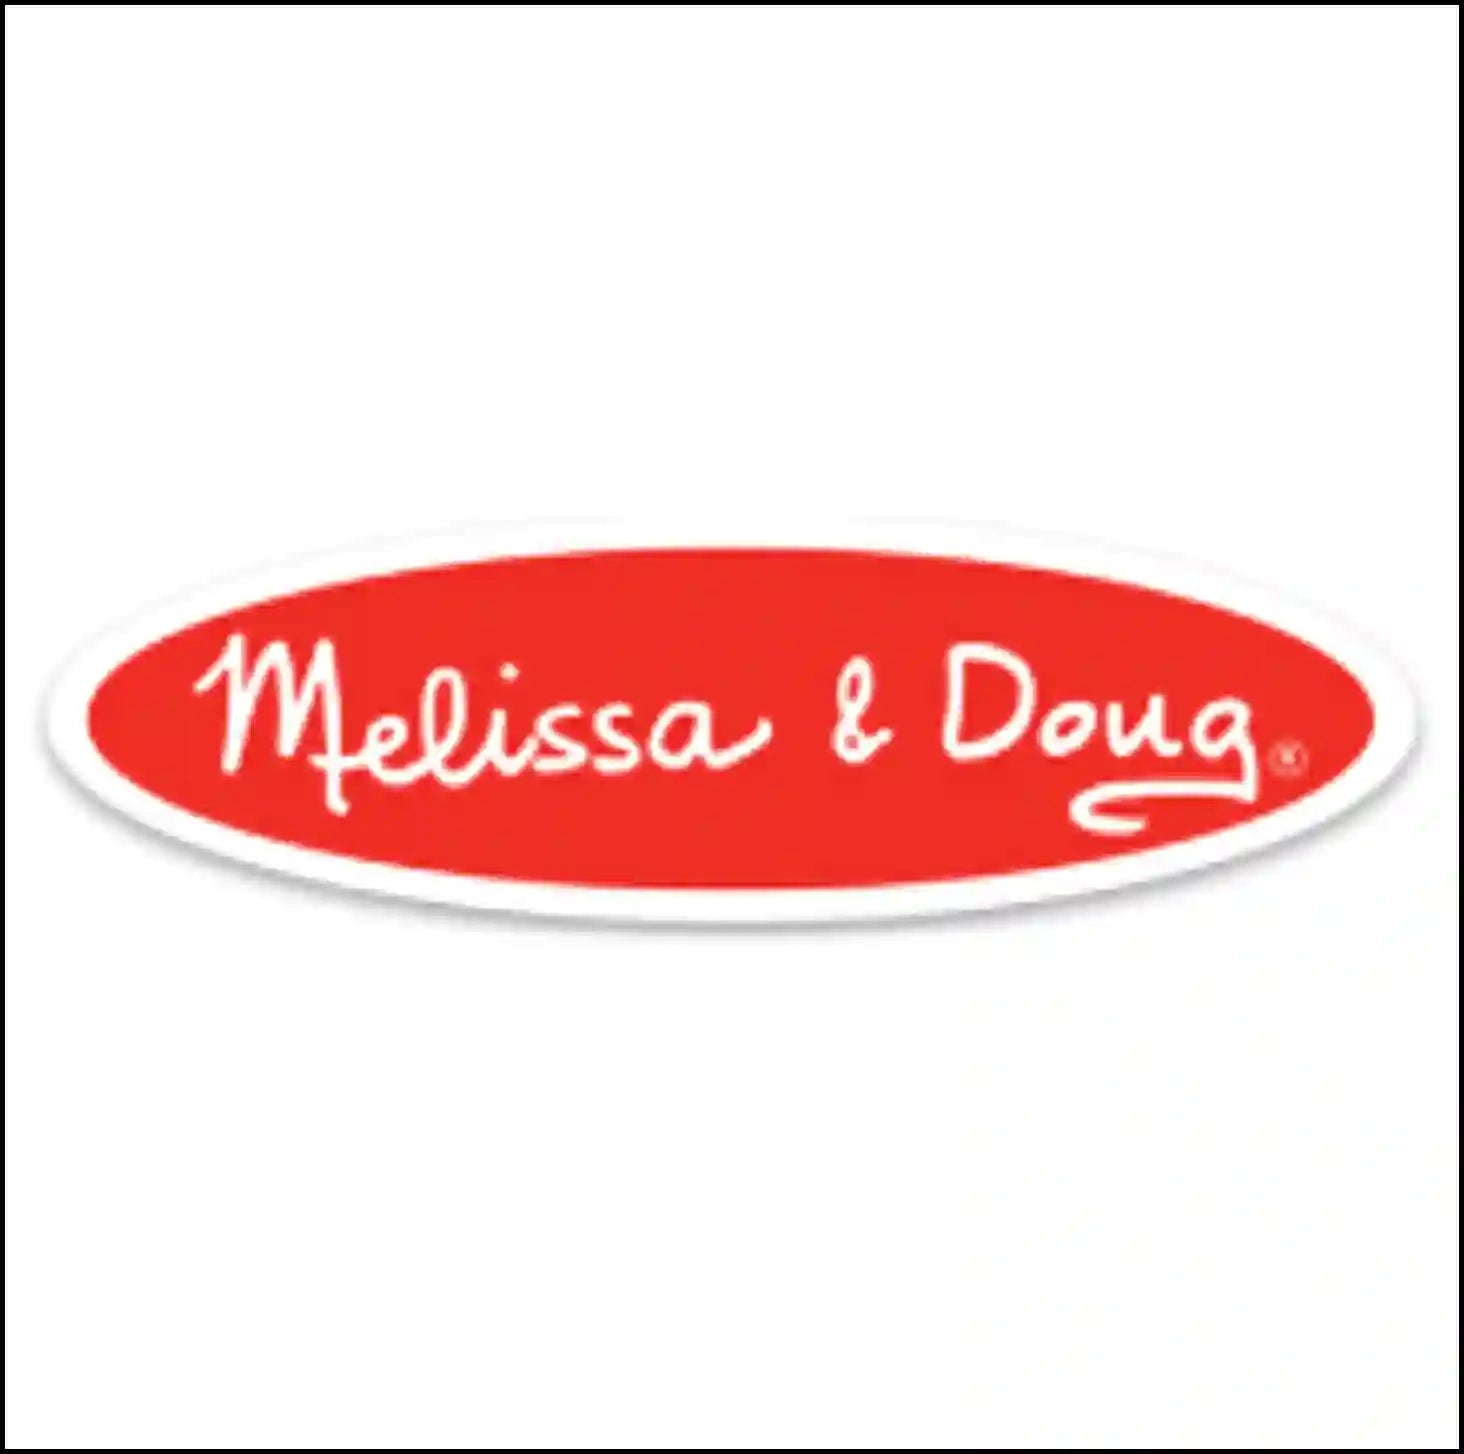 Melissa & Doug_LOGO_IMAGE_SALOT